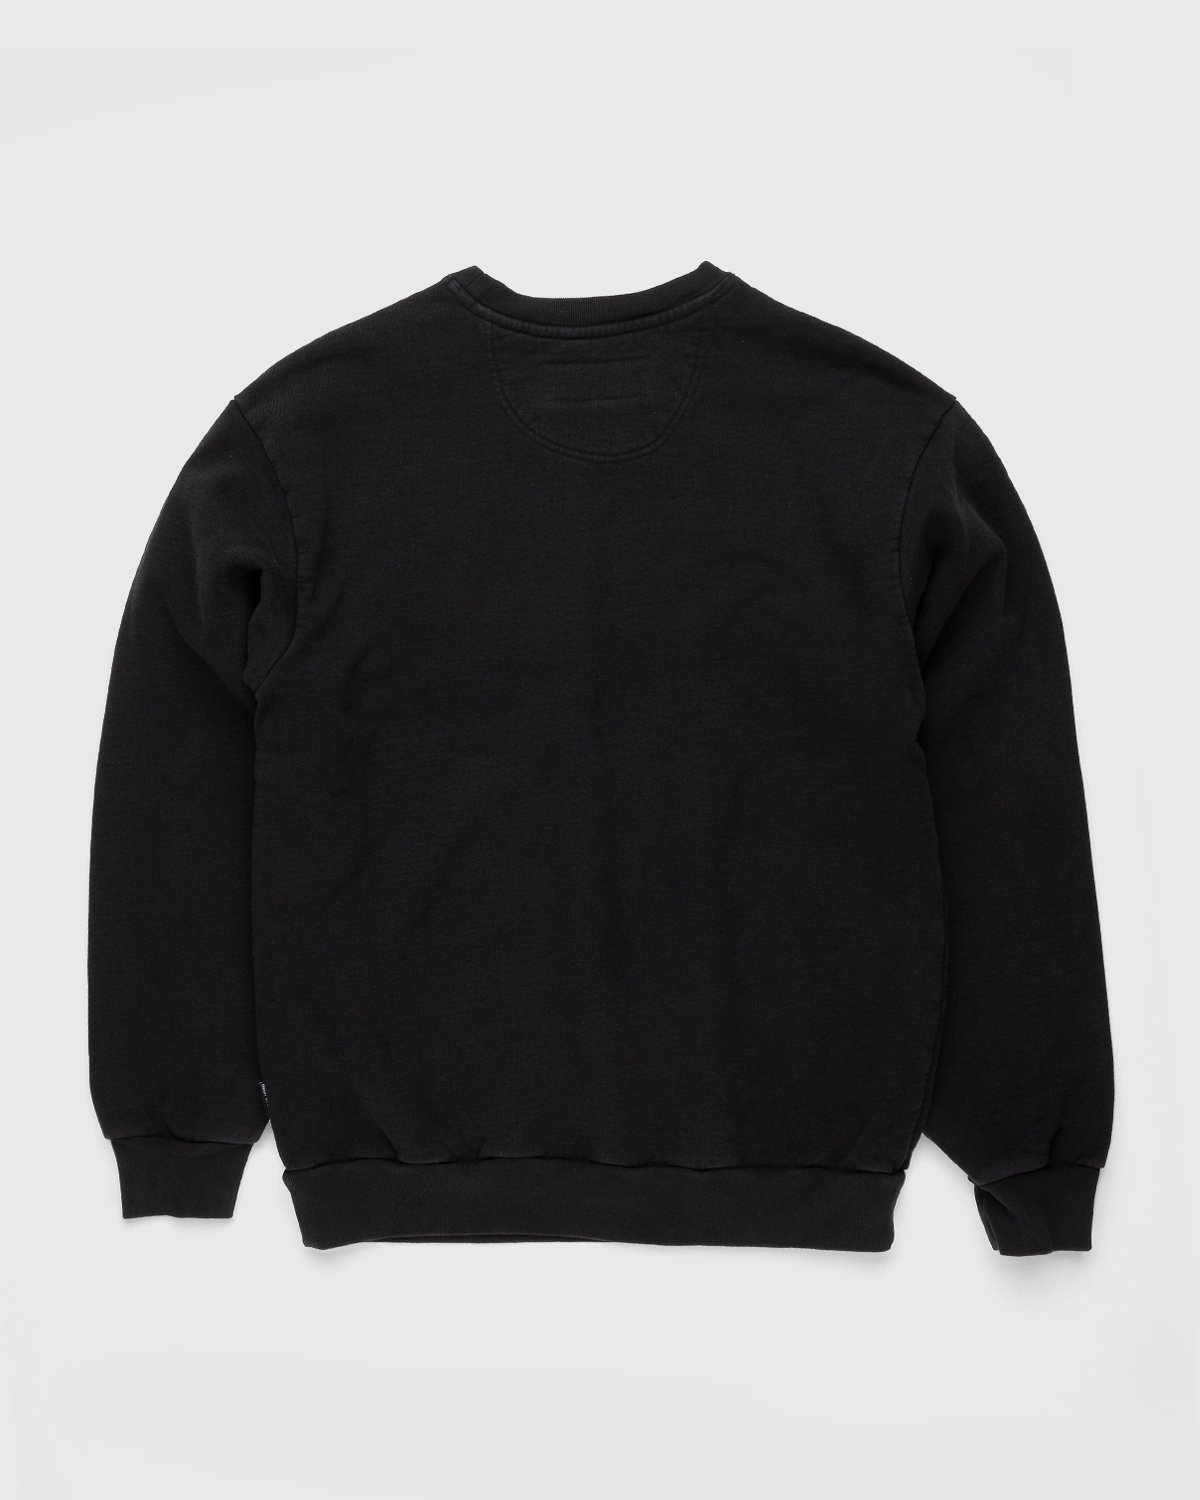 Noon Goons - Garden Sweatshirt Black - Clothing - Black - Image 2